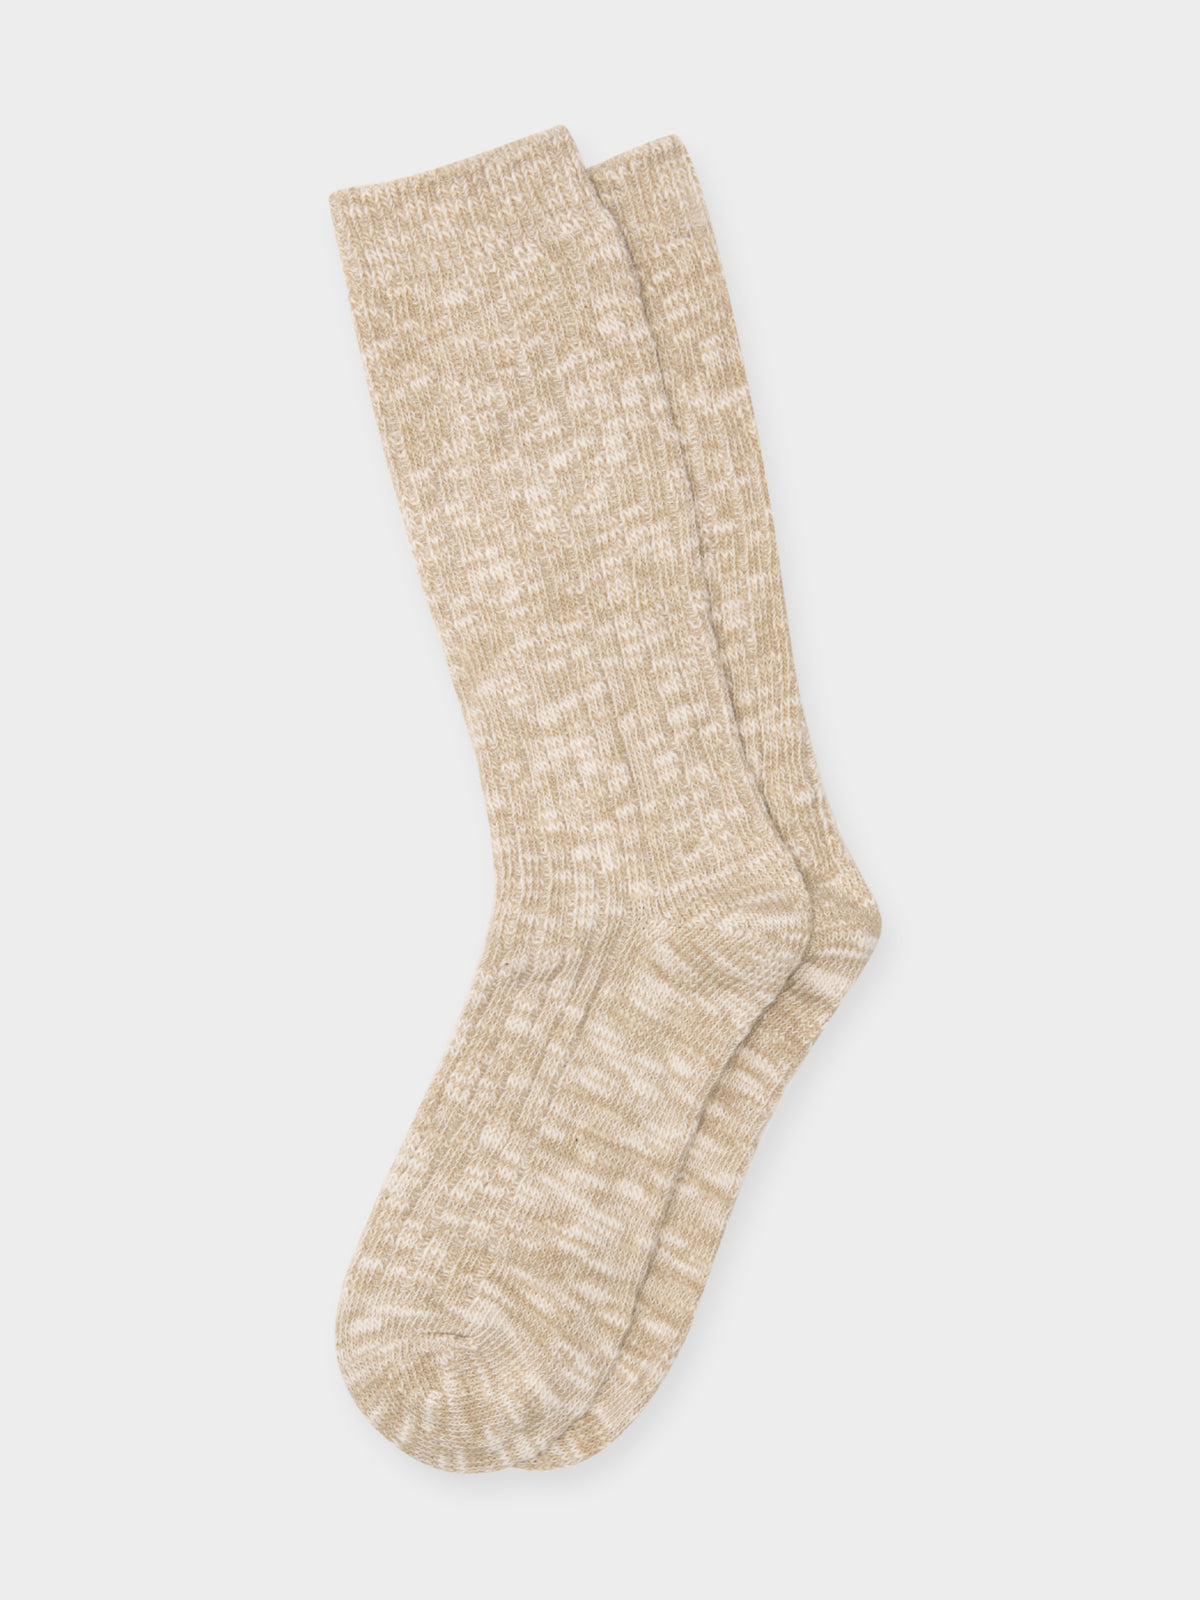 Lounge Knit Socks in Natural